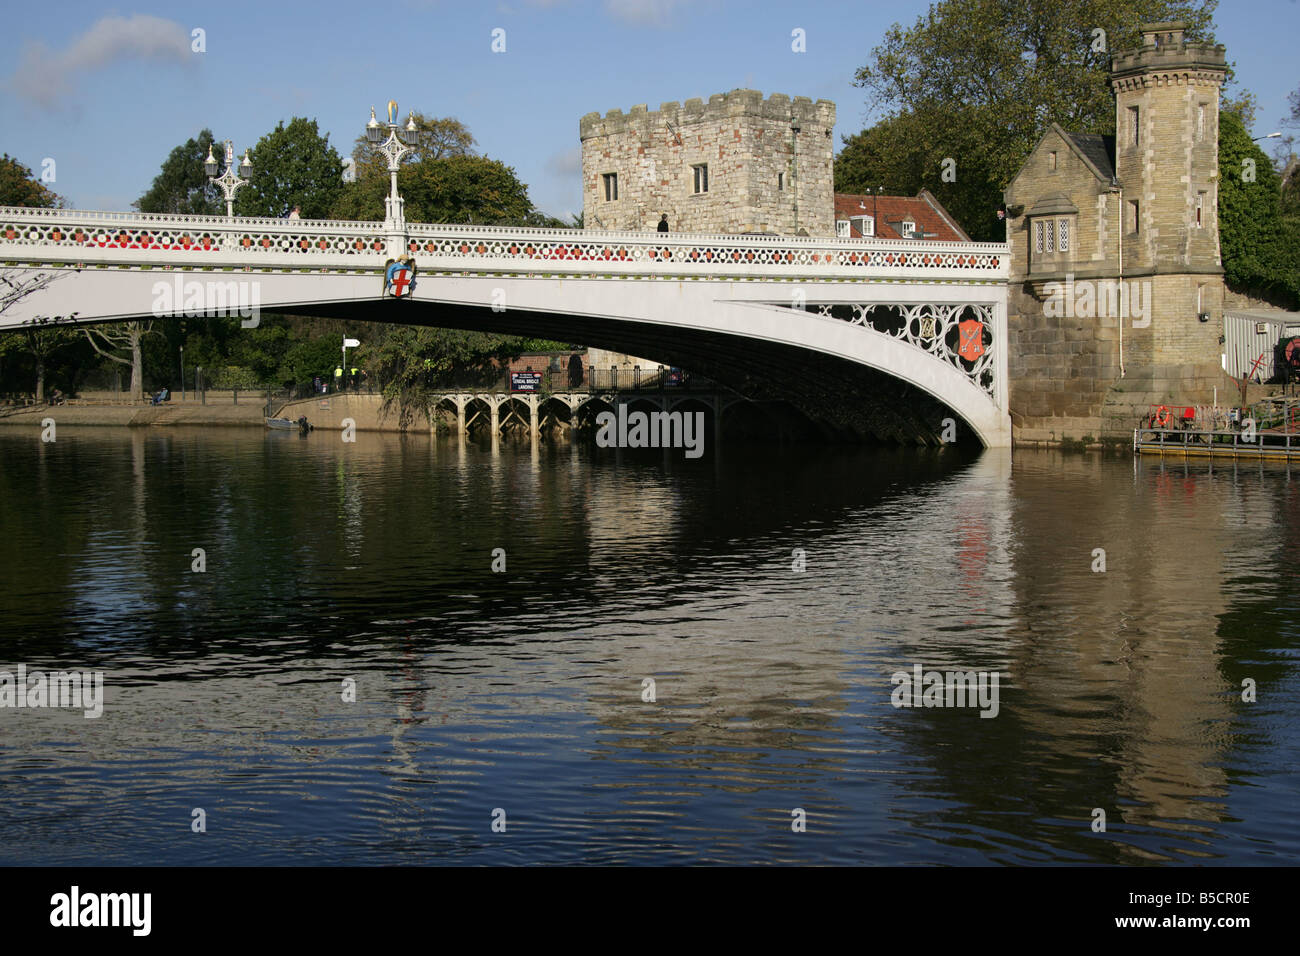 City of York, England. The ornate iron 19th century Lendal Bridge over the River Ouse. Stock Photo